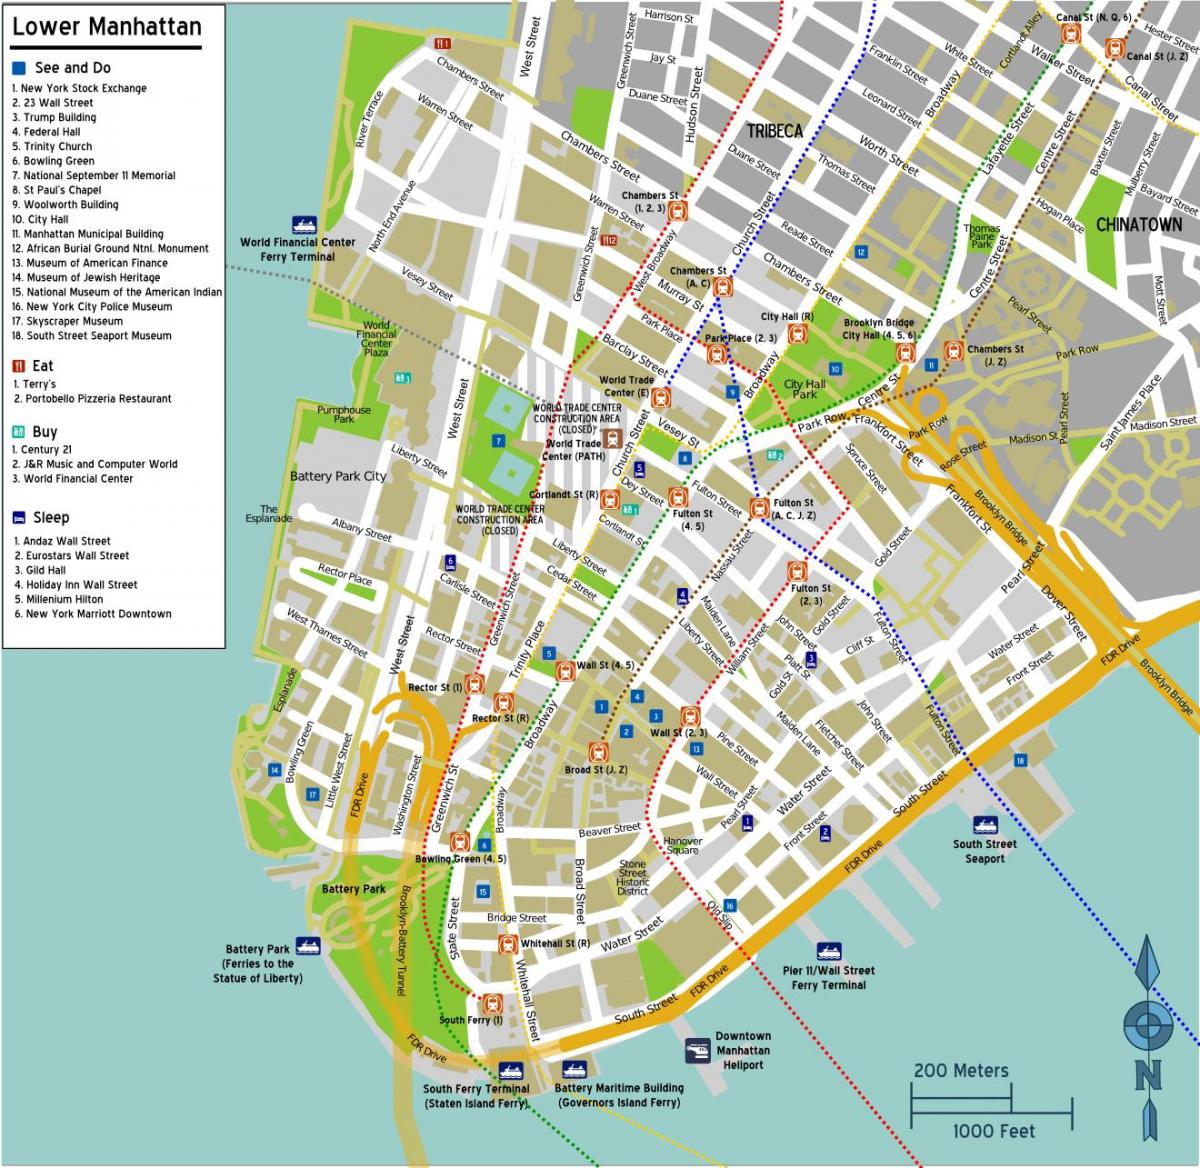 térkép alsó Manhattan utcanevek